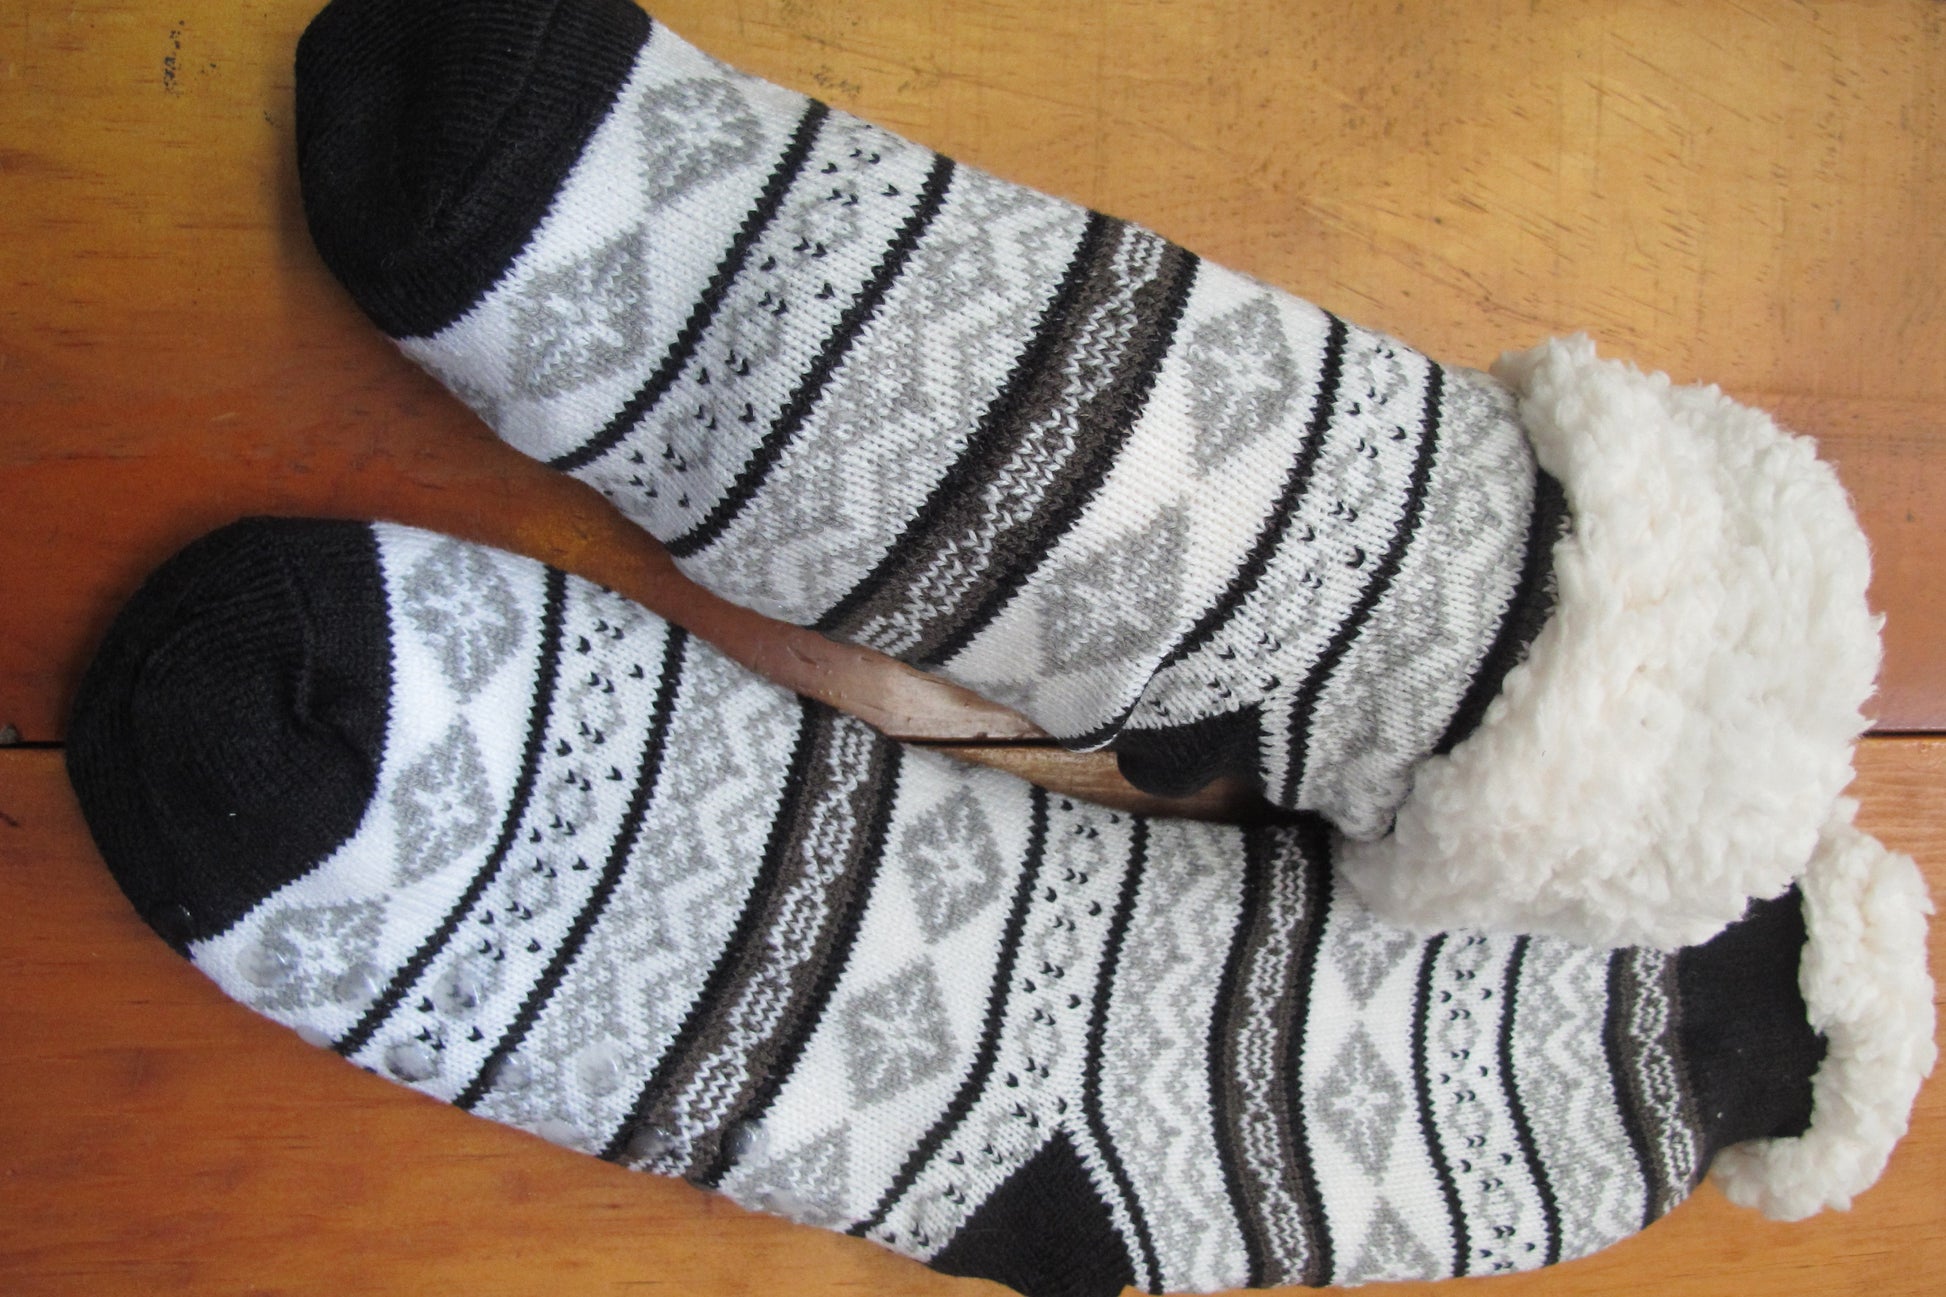 Sherpa-Lined Cabin Socks black, white, grey color.  Snowflake/fairisle design